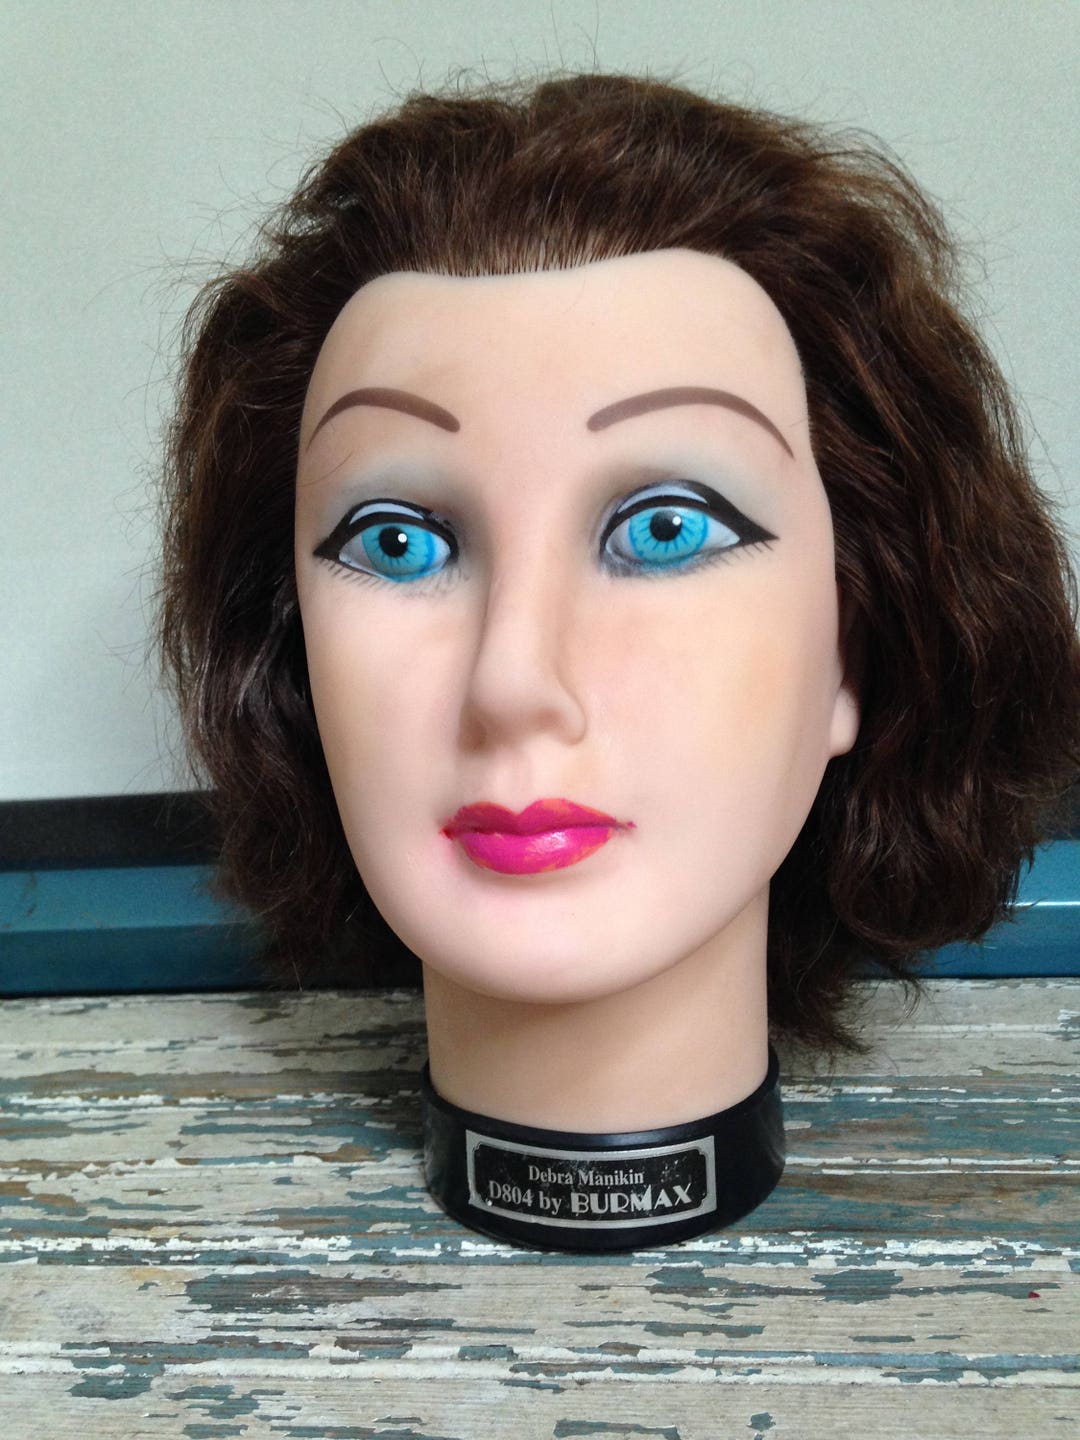 Plastic Mannequin Head, Debra Manikin, D804 by Burmax, Auburn Hair, Blue  Eyes, Red Rose Lips -  Norway